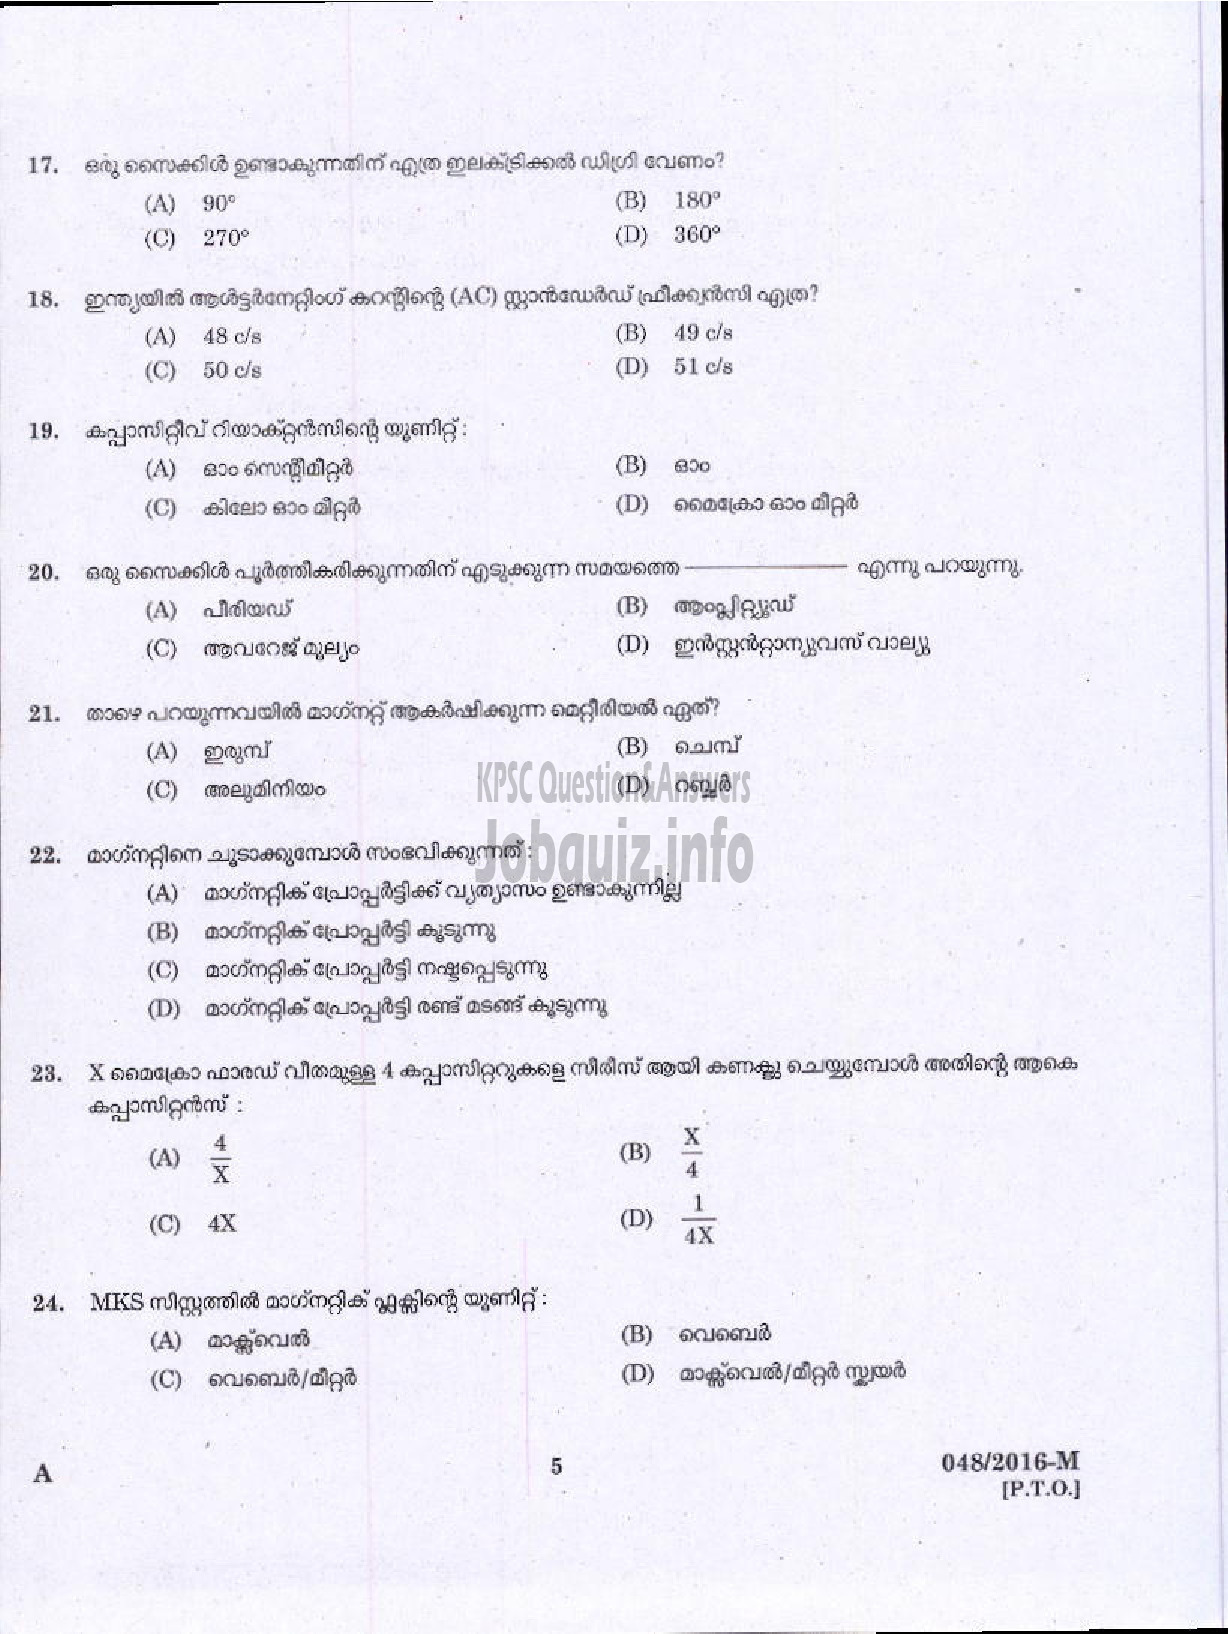 Kerala PSC Question Paper - METER READER / SPOT BILLER KSEB-3